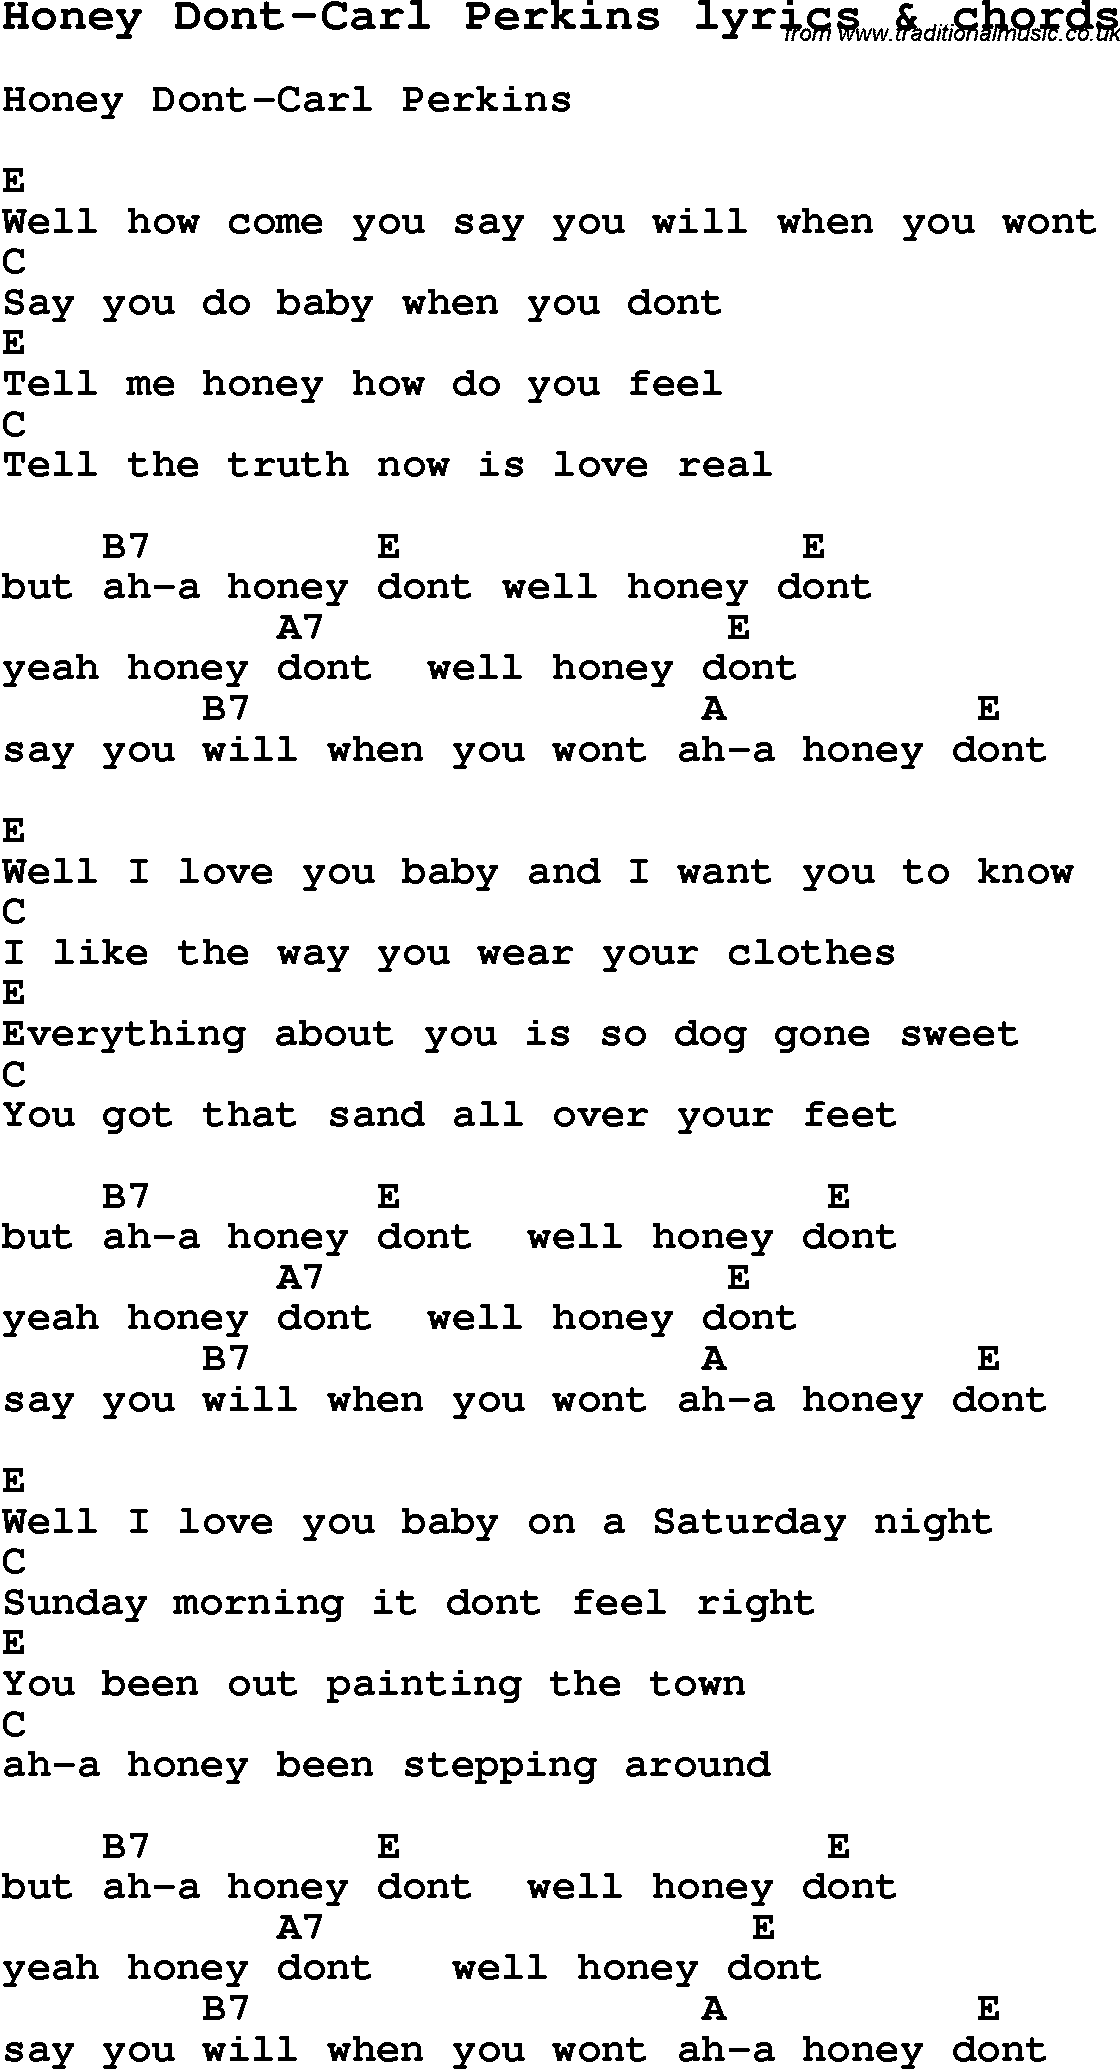 Love Song Lyrics for: Honey Dont-Carl Perkins with chords for Ukulele, Guitar Banjo etc.